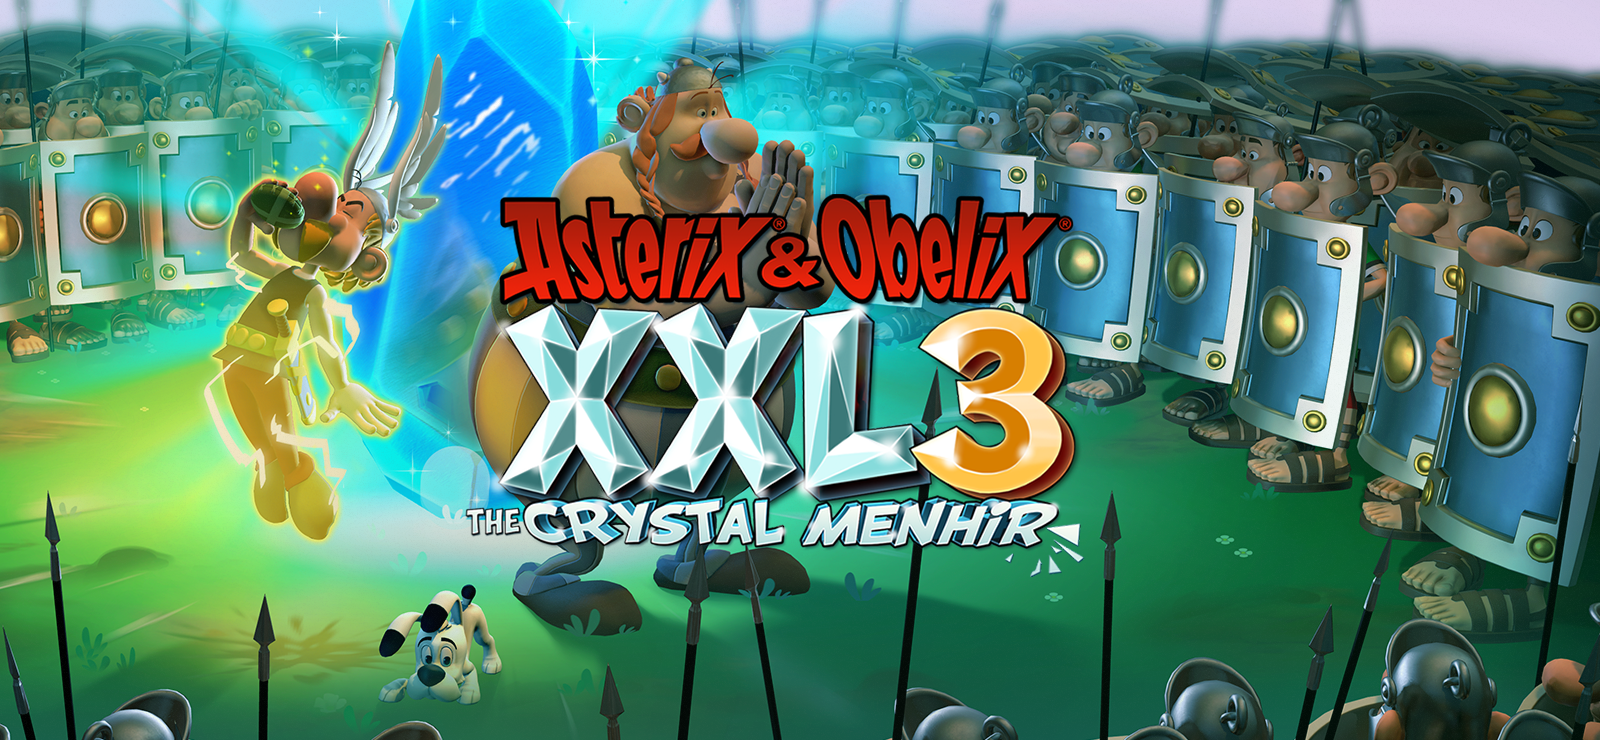 Asterix & Obelix XXL 3 - Viking Outfit